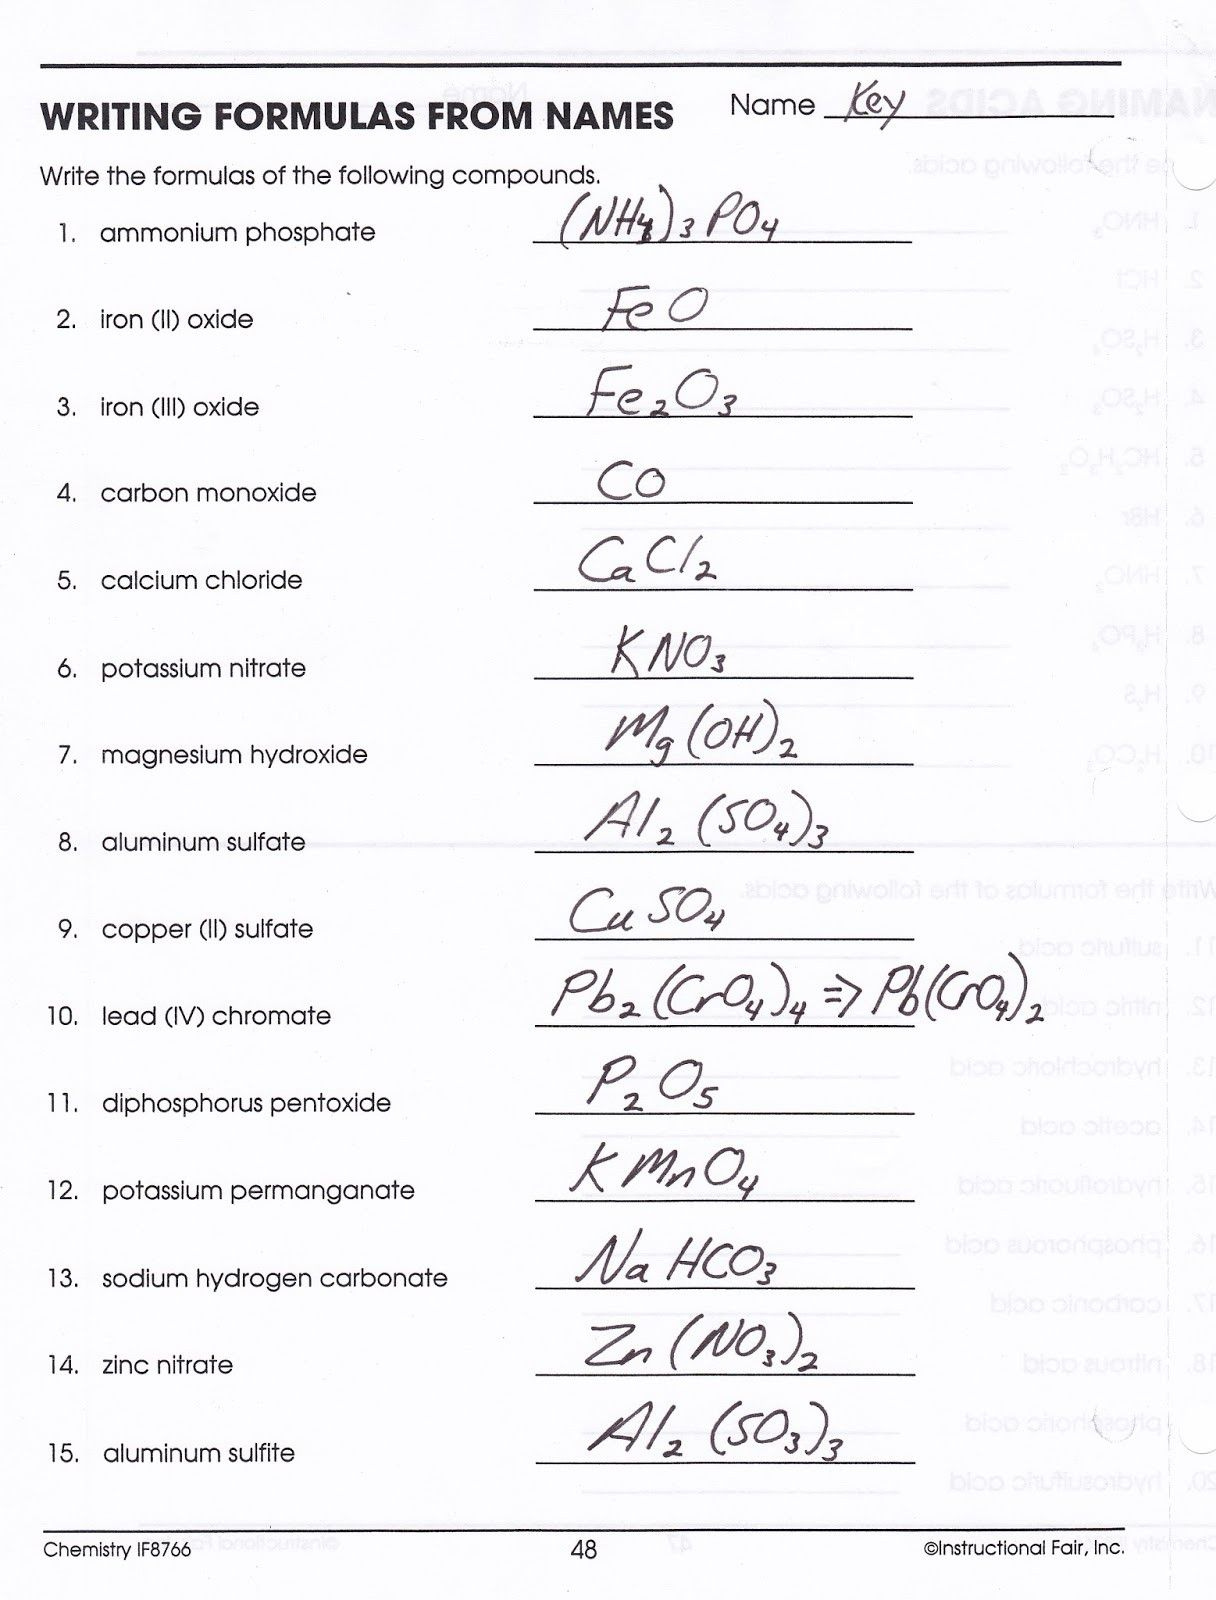 PeriodicAcademic Writing Binary Formulas Worksheet Answers 